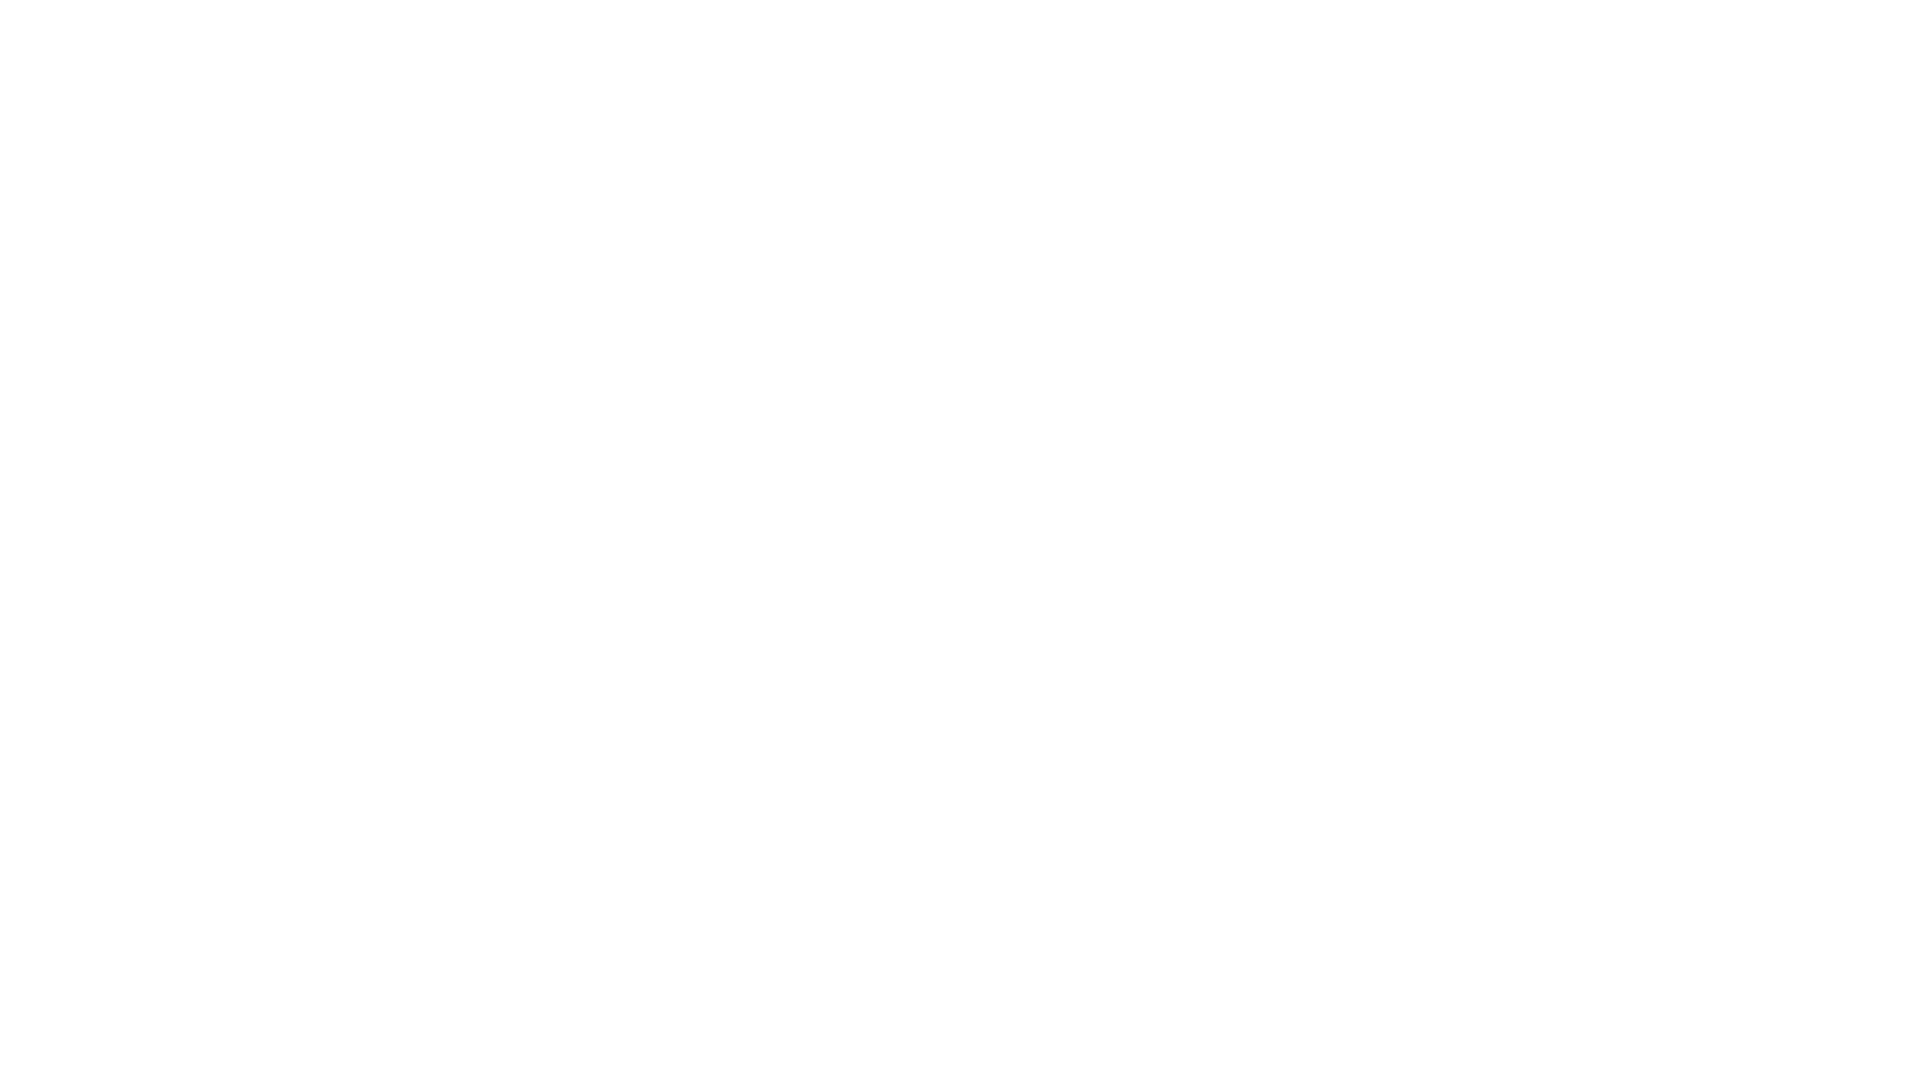 Ankay Conservation